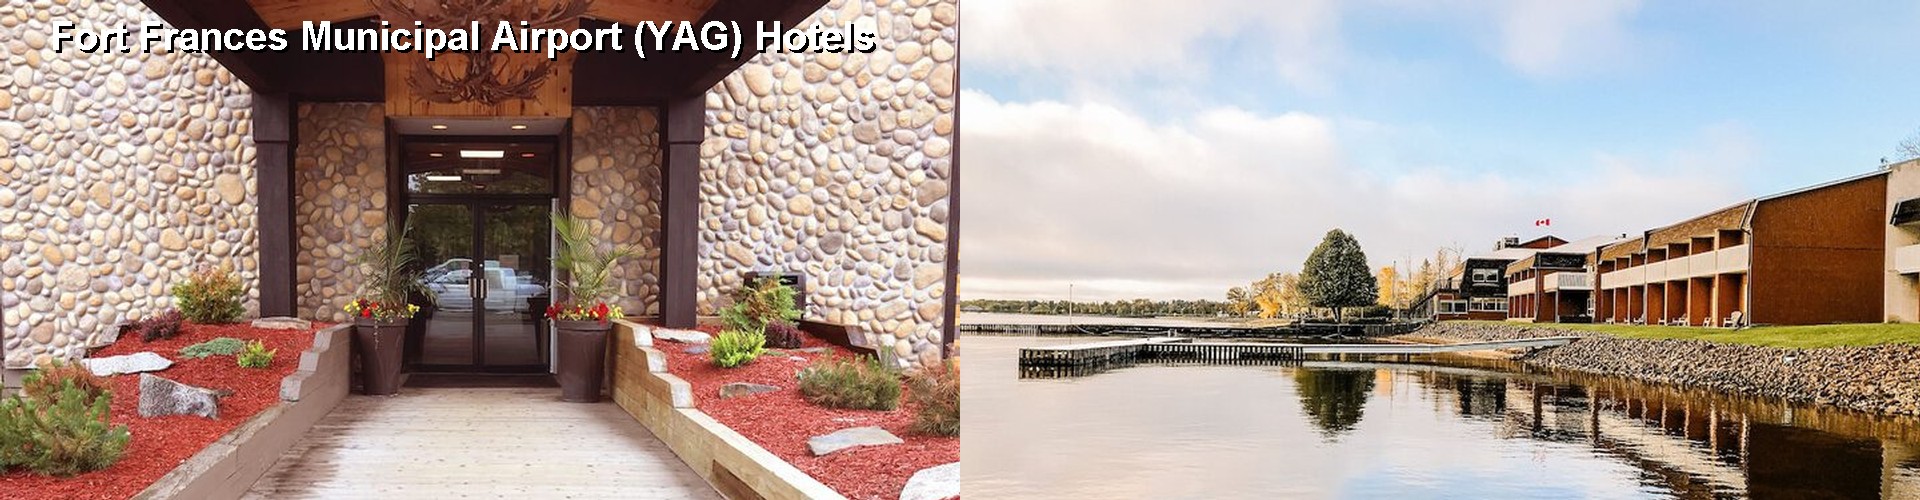 3 Best Hotels near Fort Frances Municipal Airport (YAG)